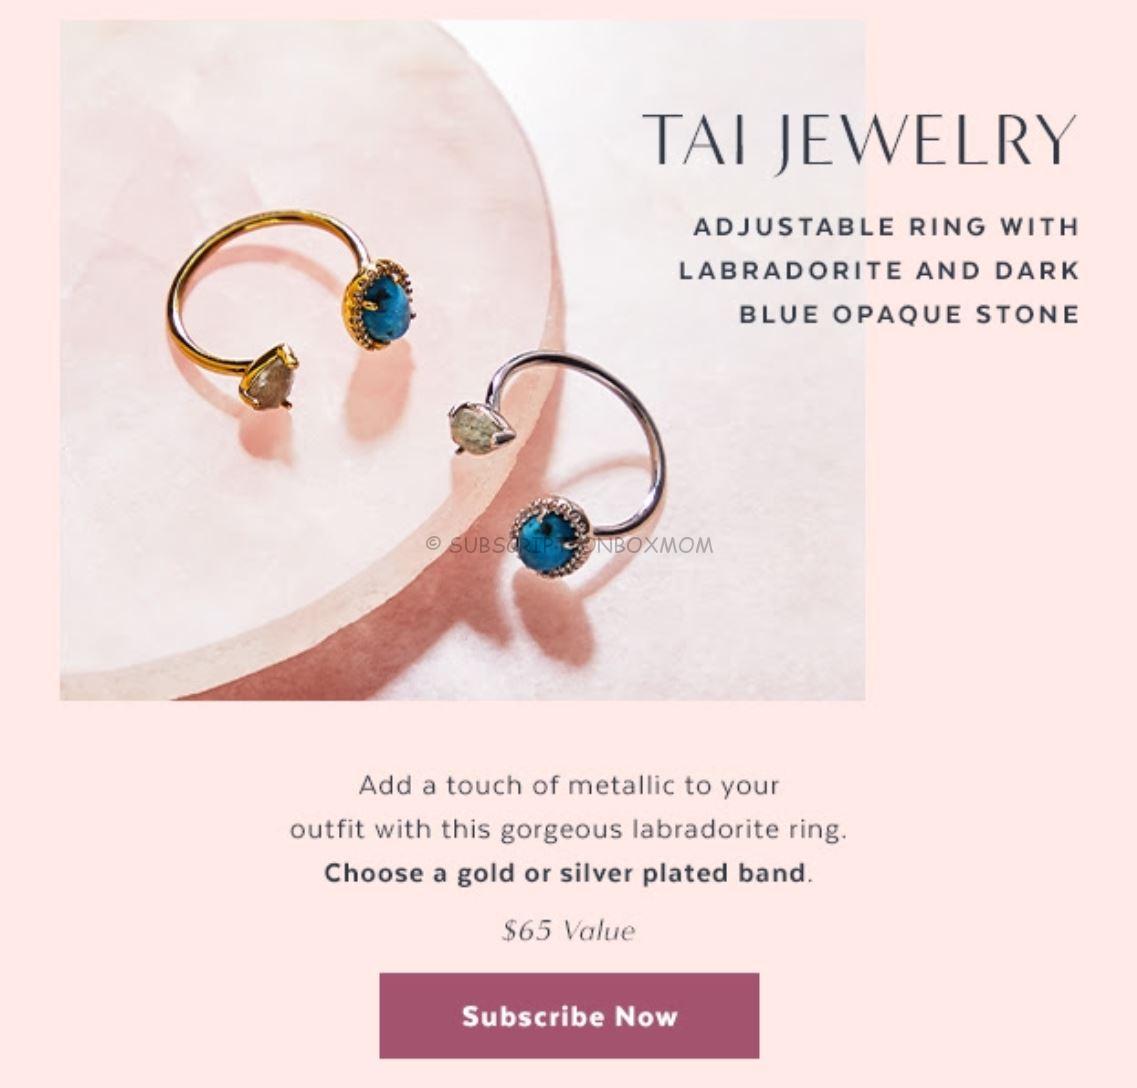 Tai Jewelry Adjustable Ring with Labradorite and Dark Blue Opaque Stone